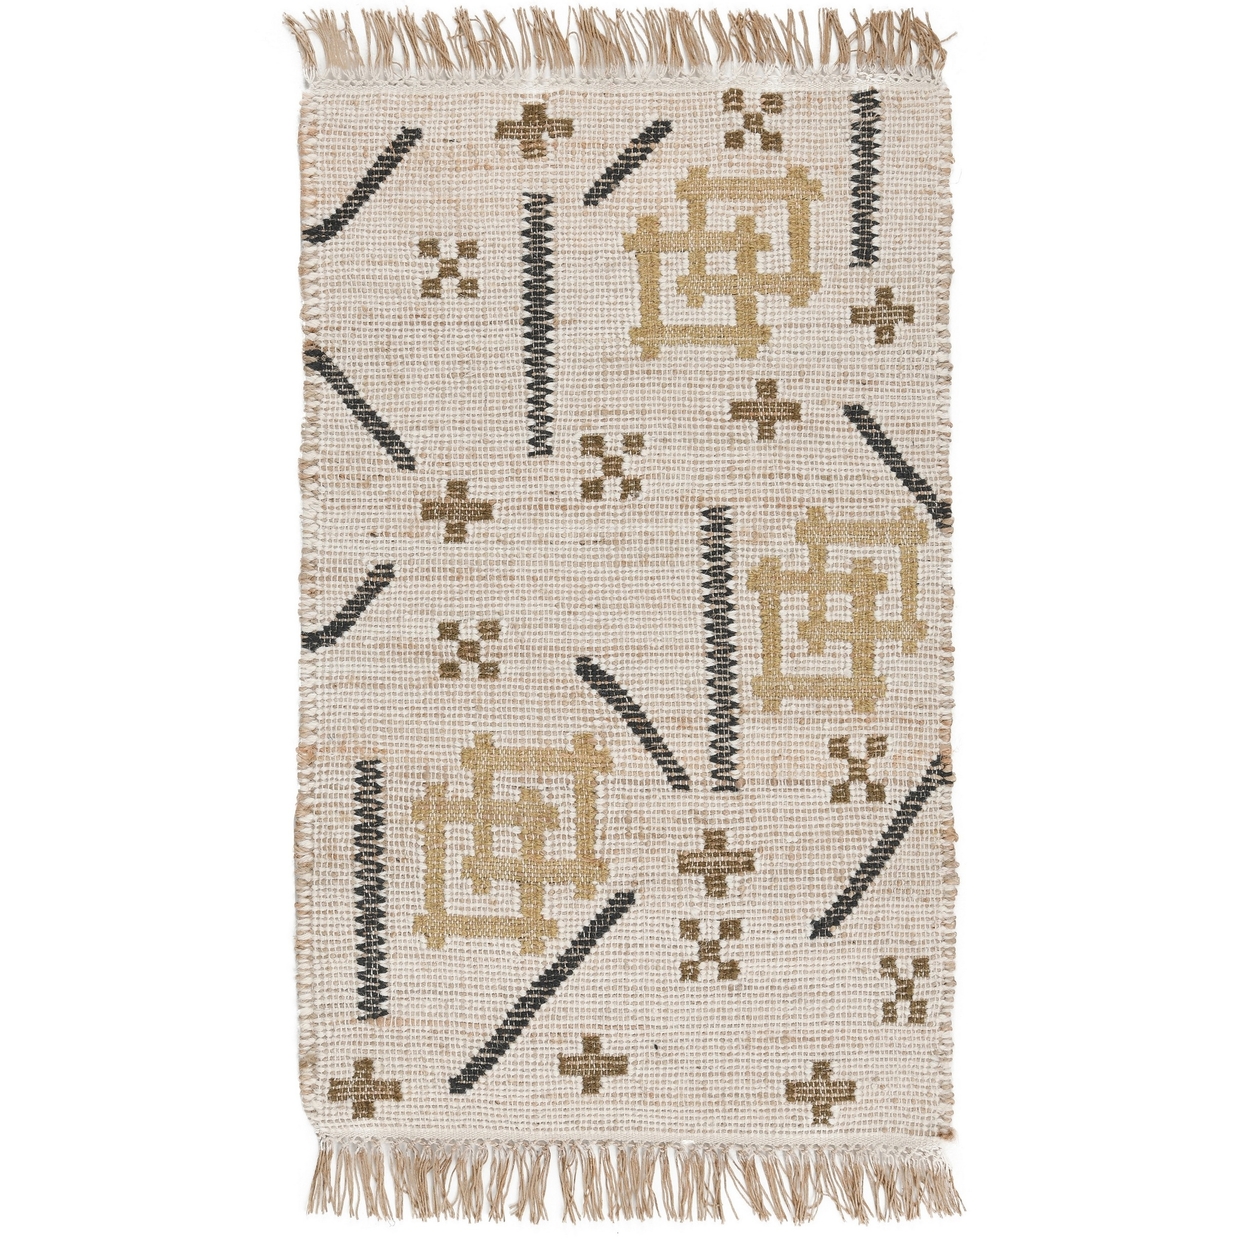 Hona 5 X 8 Medium Handwoven Area Rug, Multicolor Geometric Patterns, Ivory- Saltoro Sherpi